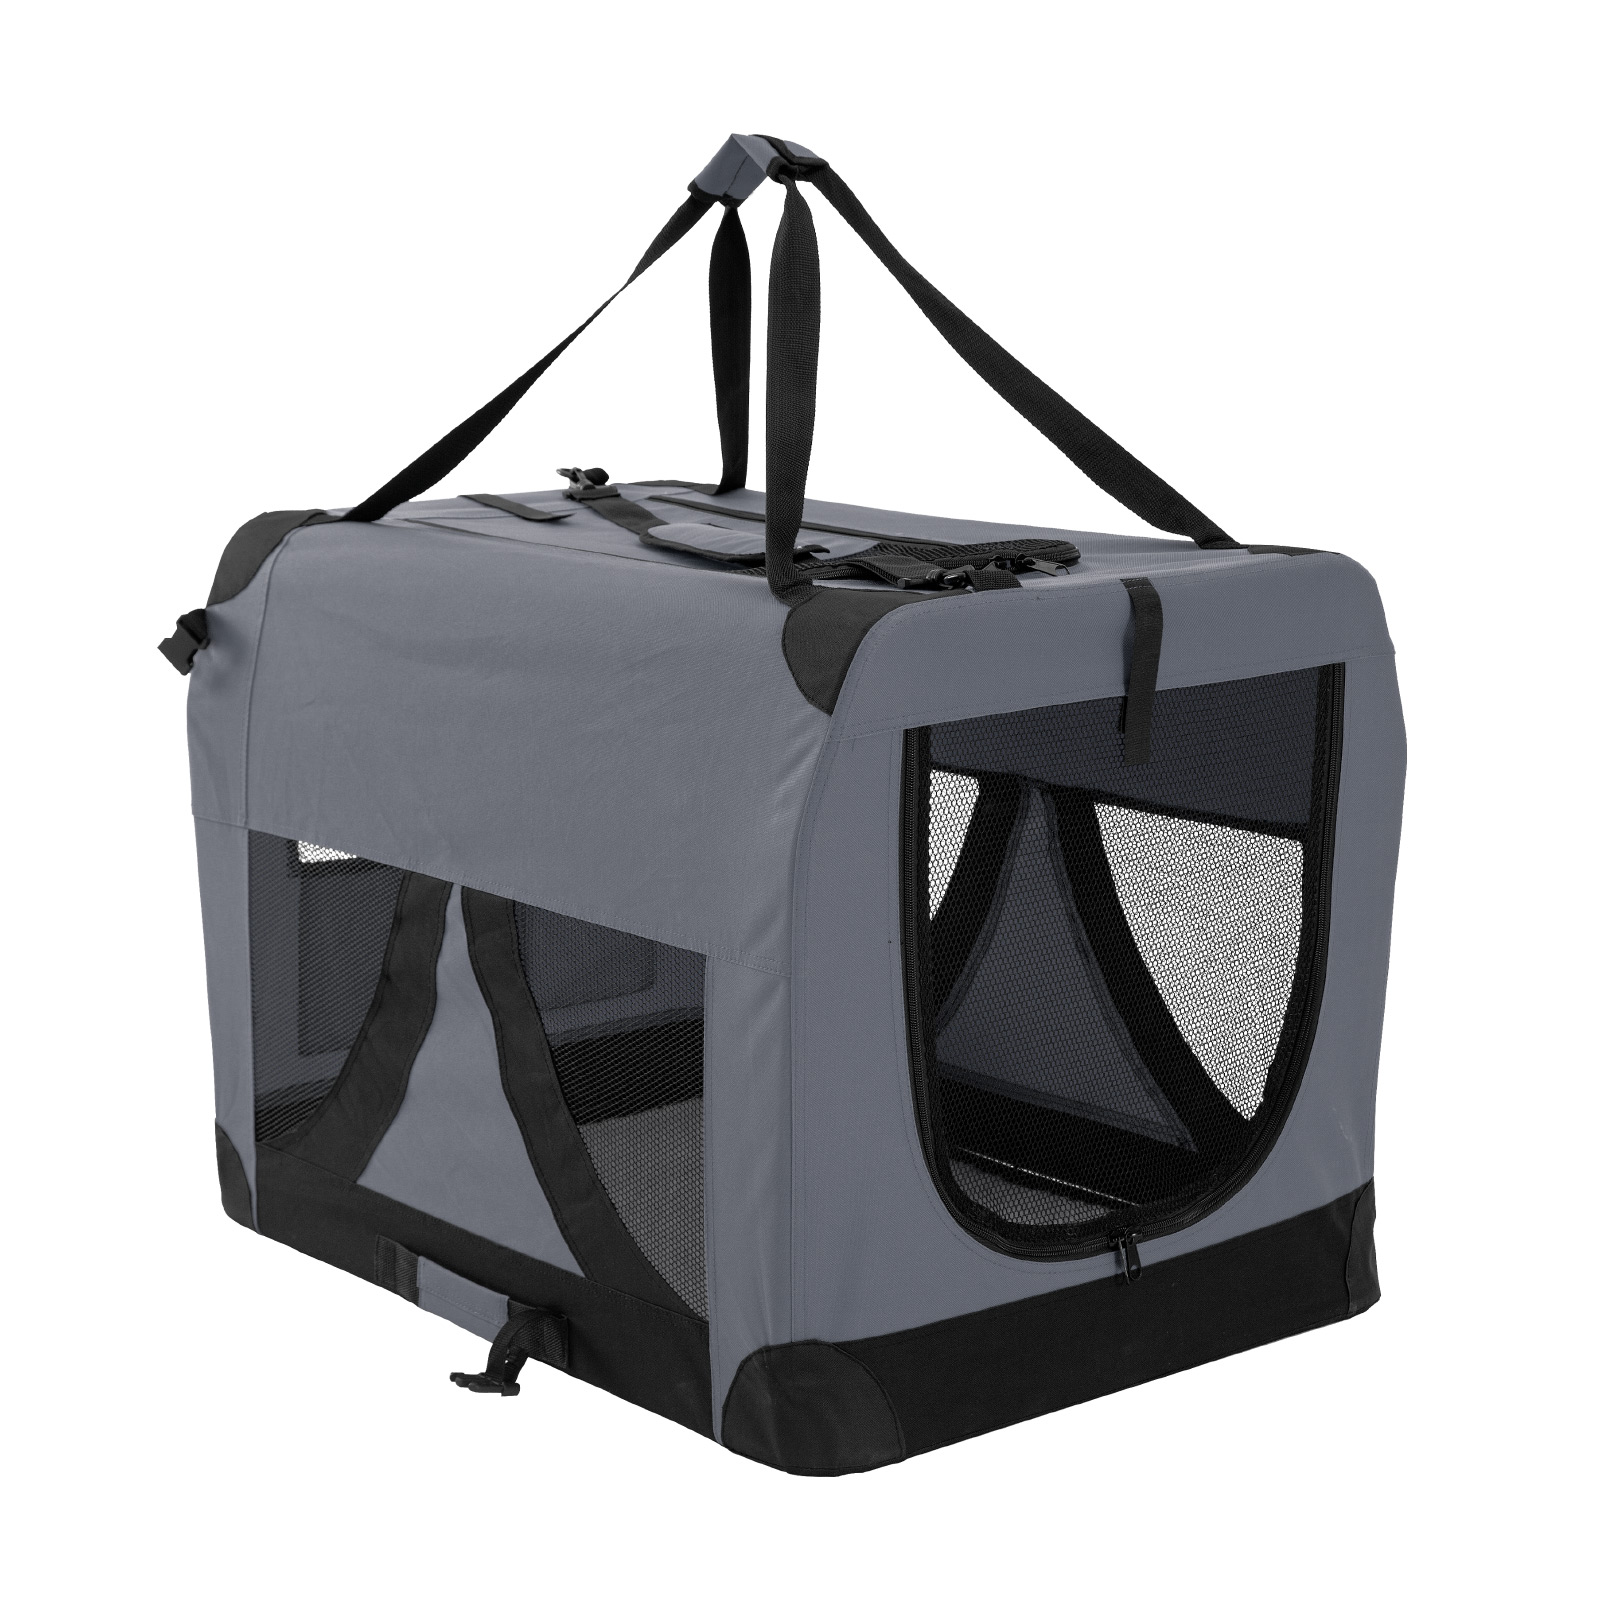 L Portable Soft Dog Crate - GREY